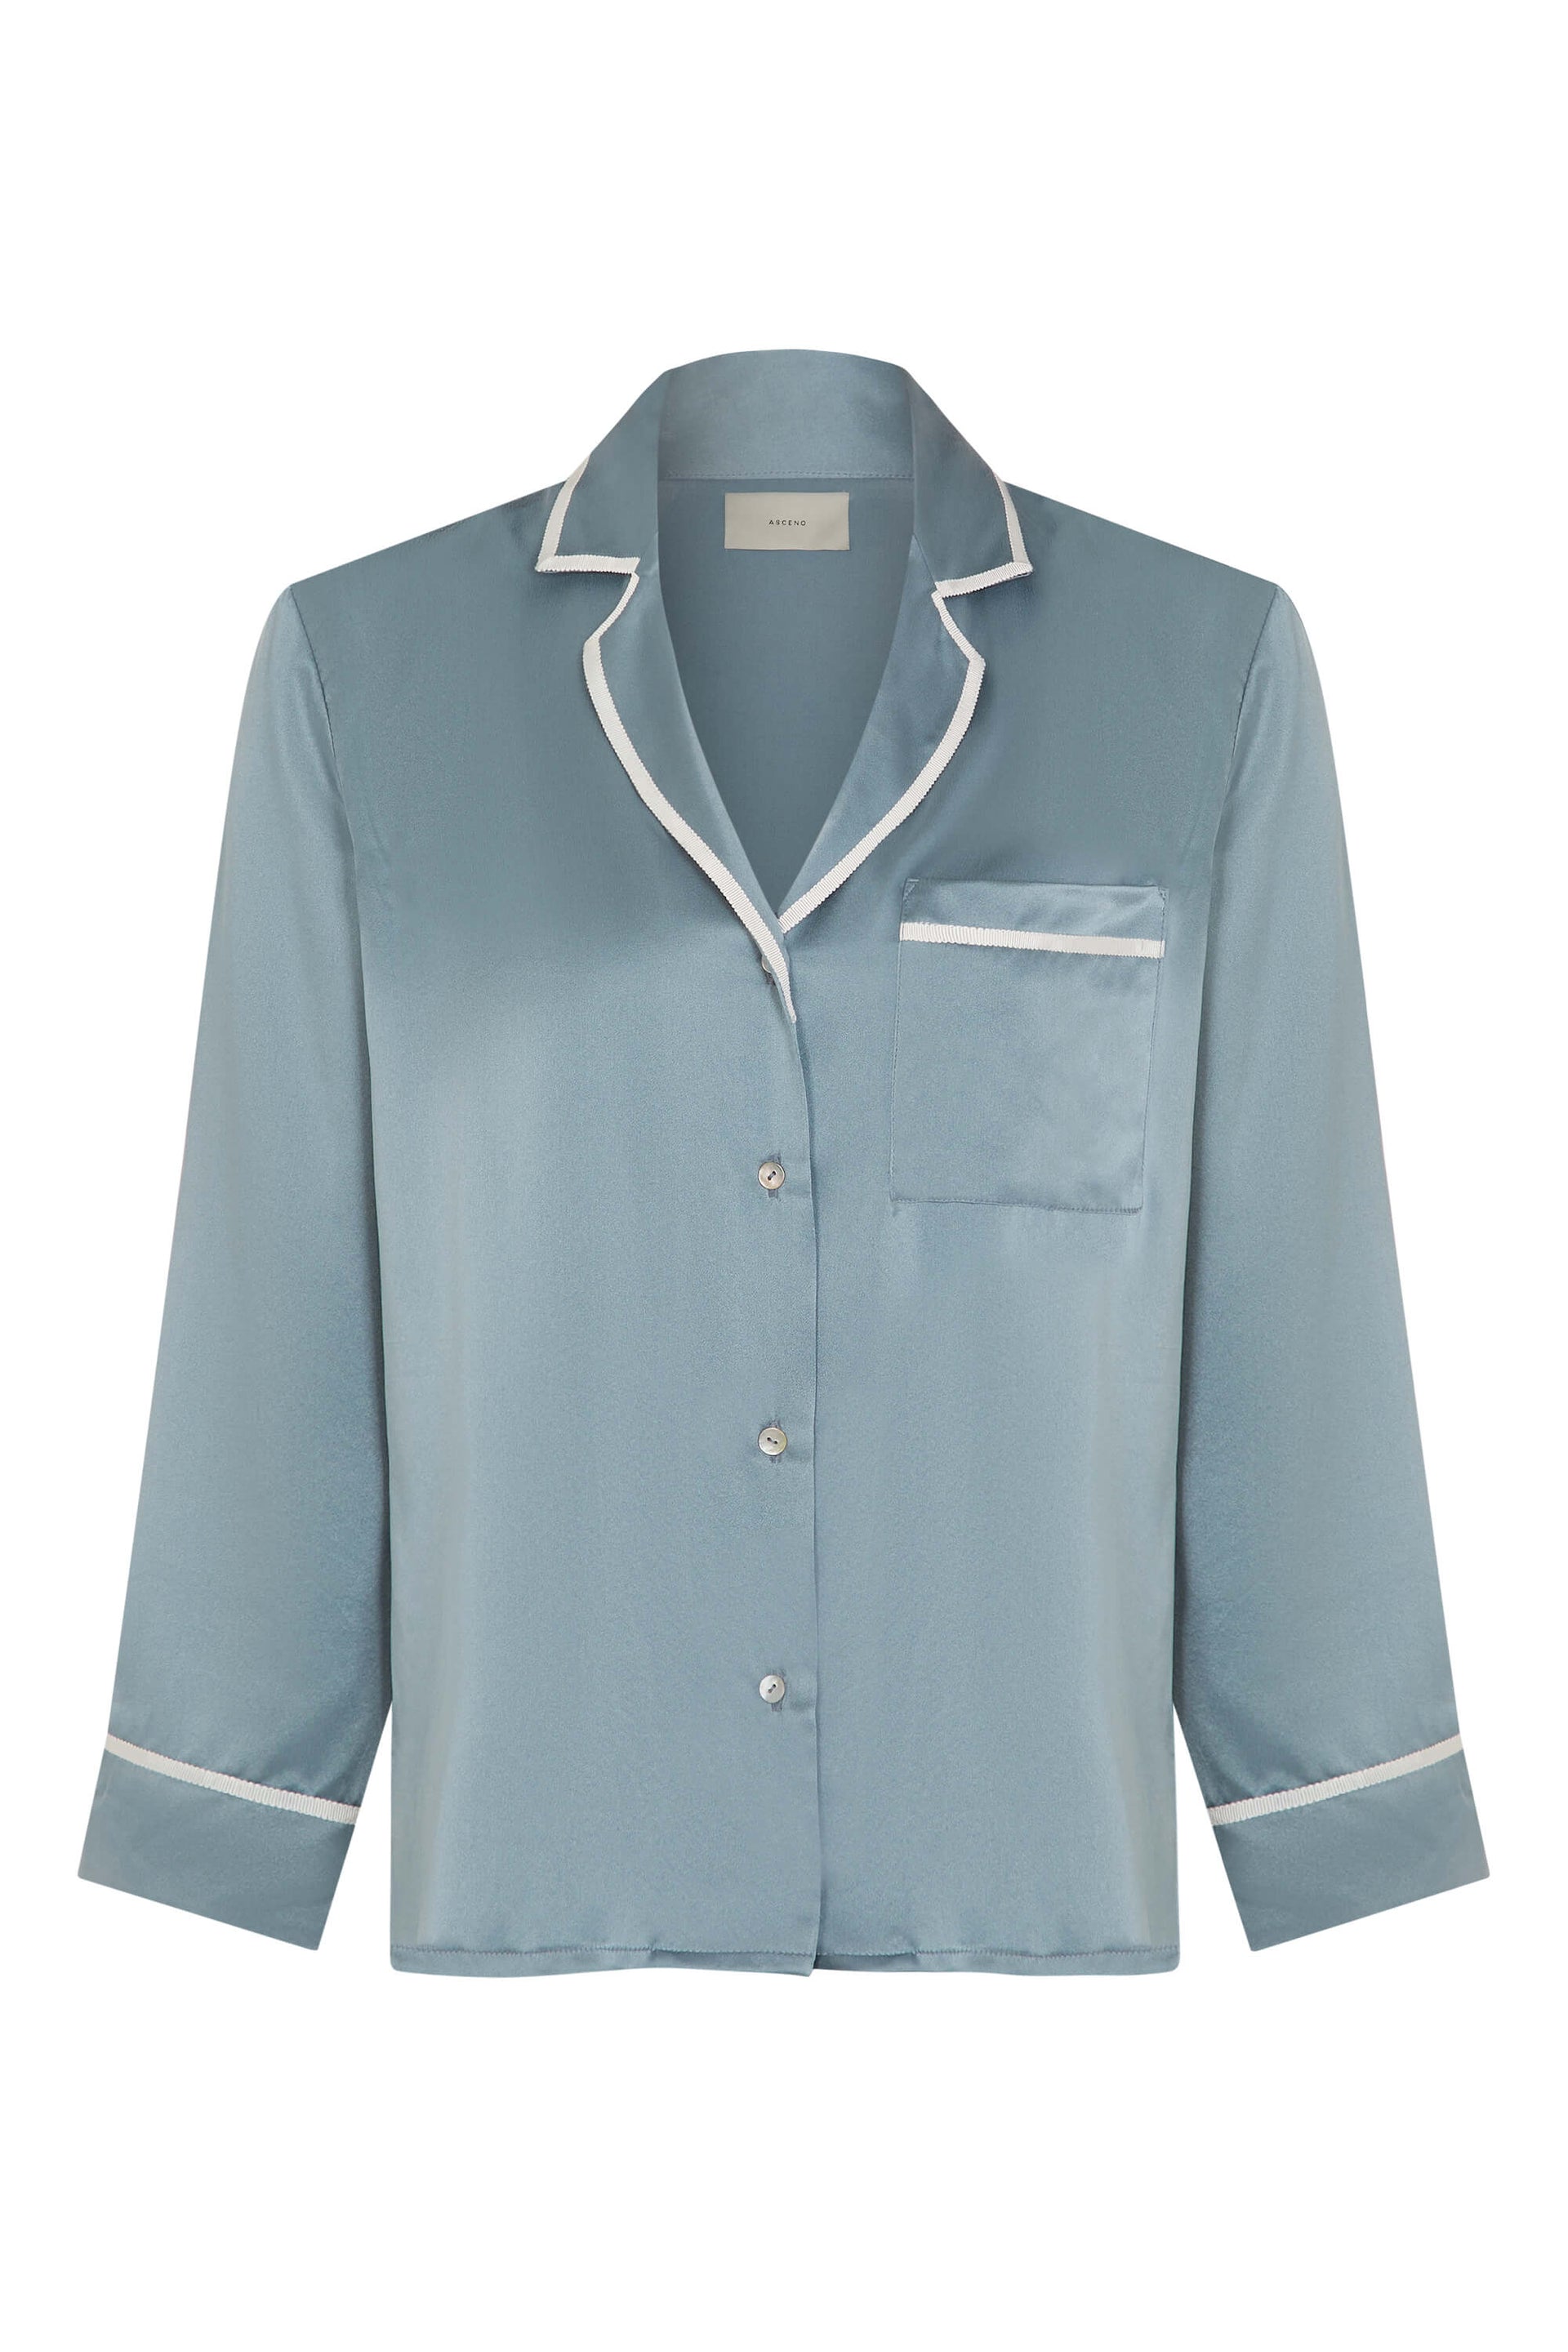 Sydney Cropped Pyjama Shirt Dust Blue Ribbon Pipped Silk